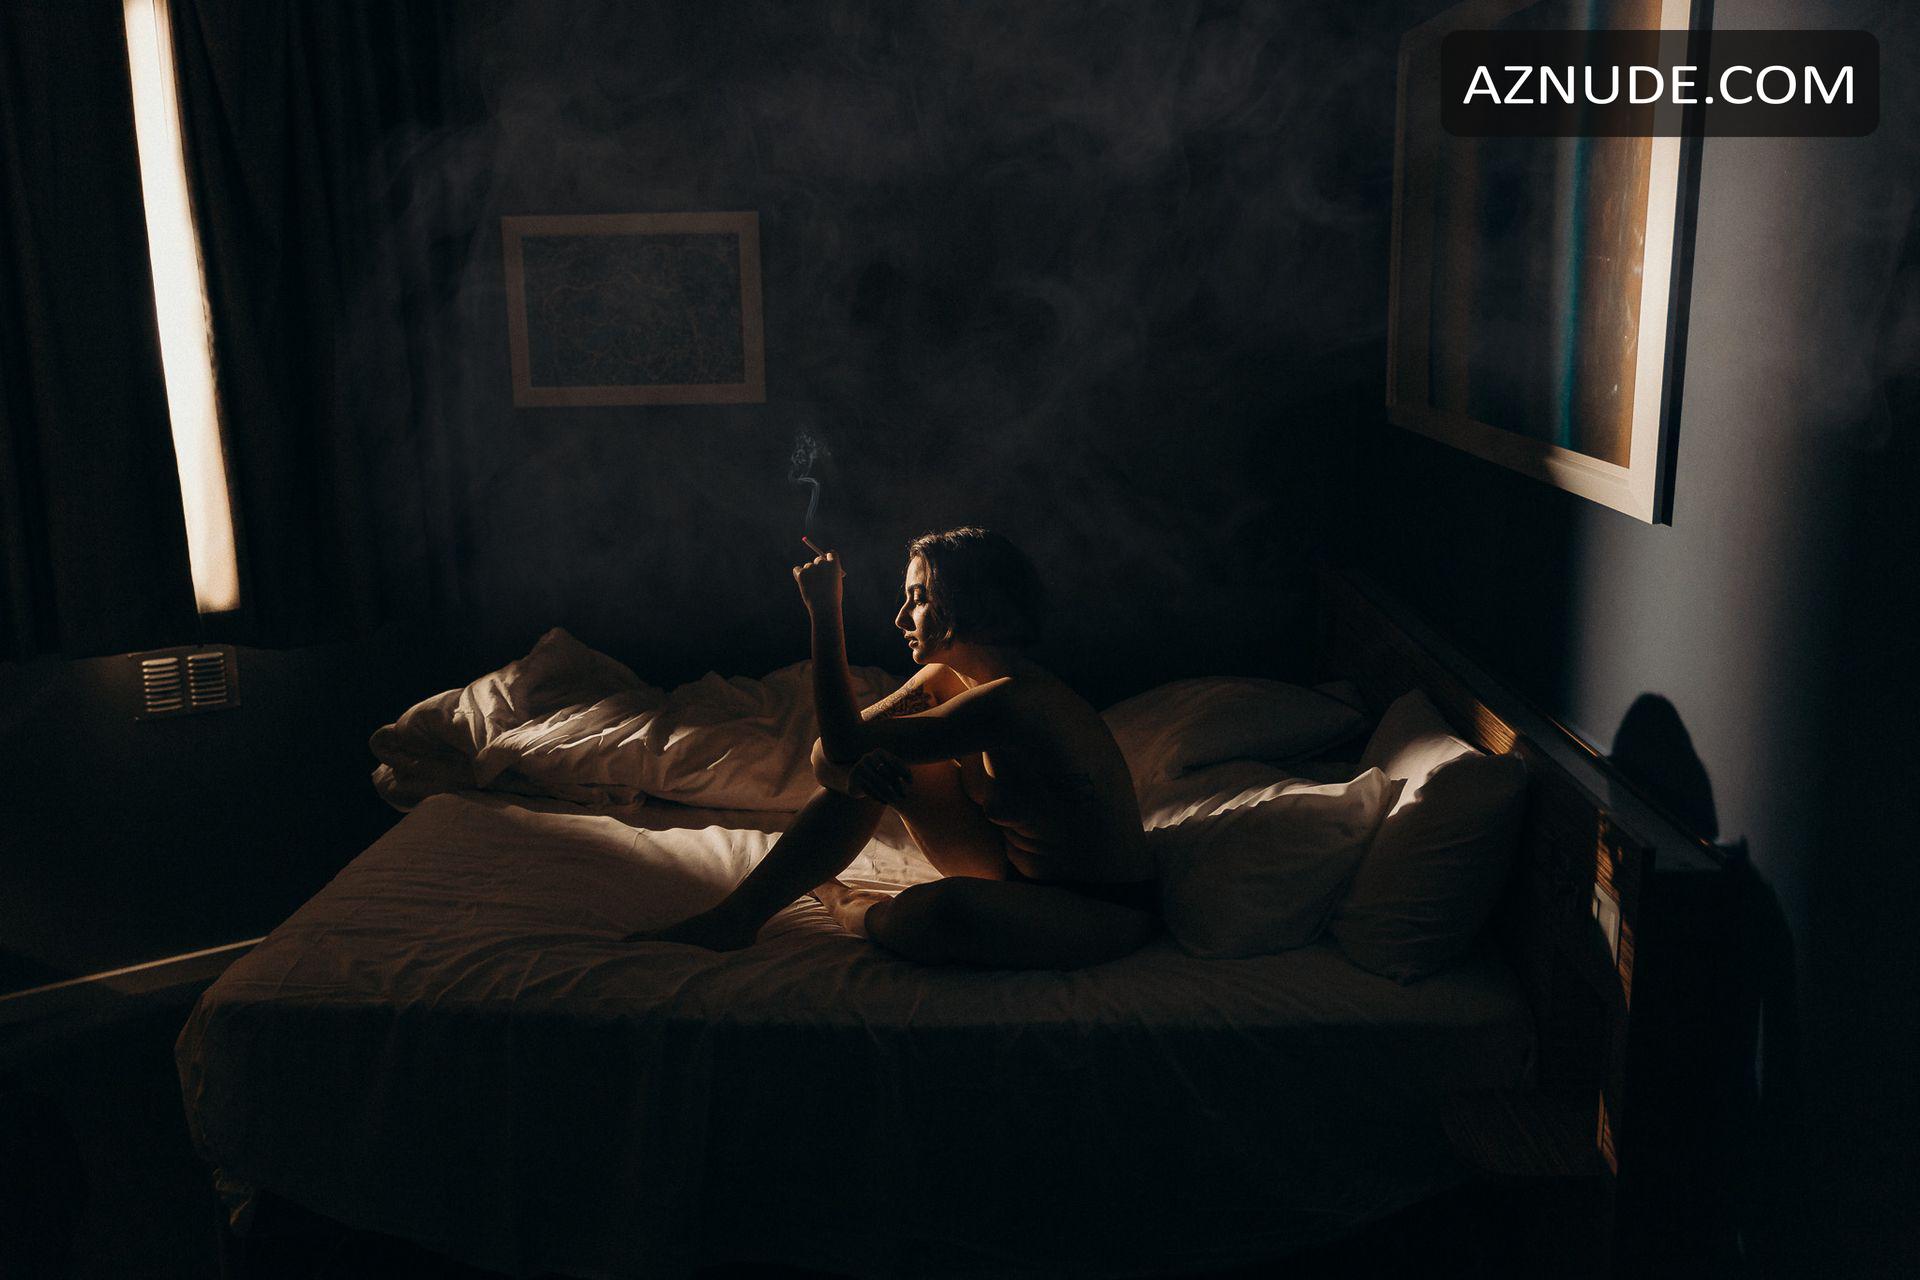 Francesca Milano photographed by Nirish Shakya naked in bed - AZNude